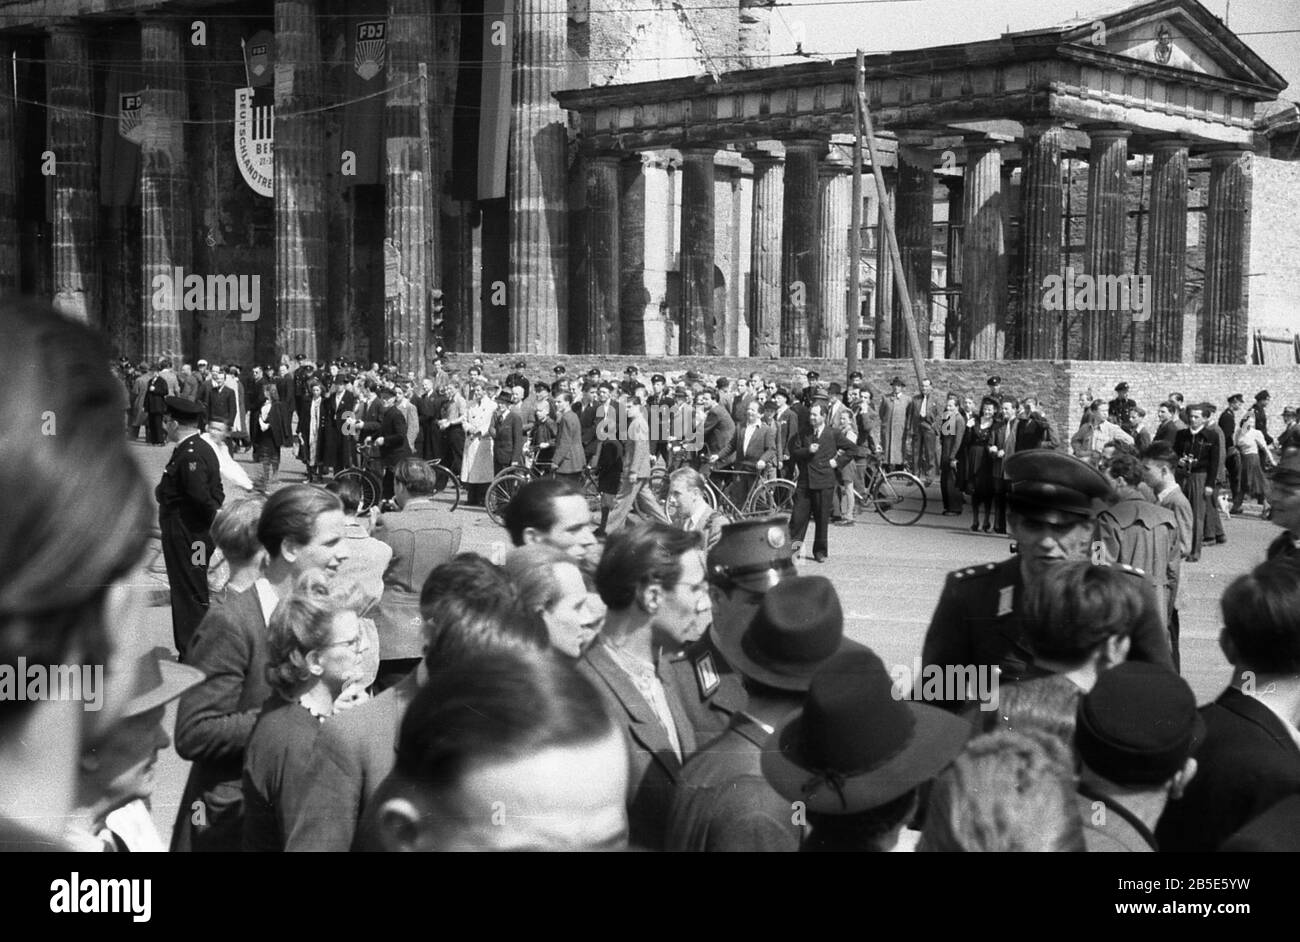 Sowjetisches Ehrenmahl Berlin Tiergaten / Sowjetisches Kriegsdenkmal - Ertüchtung / Errichtung 1945 Stockfoto